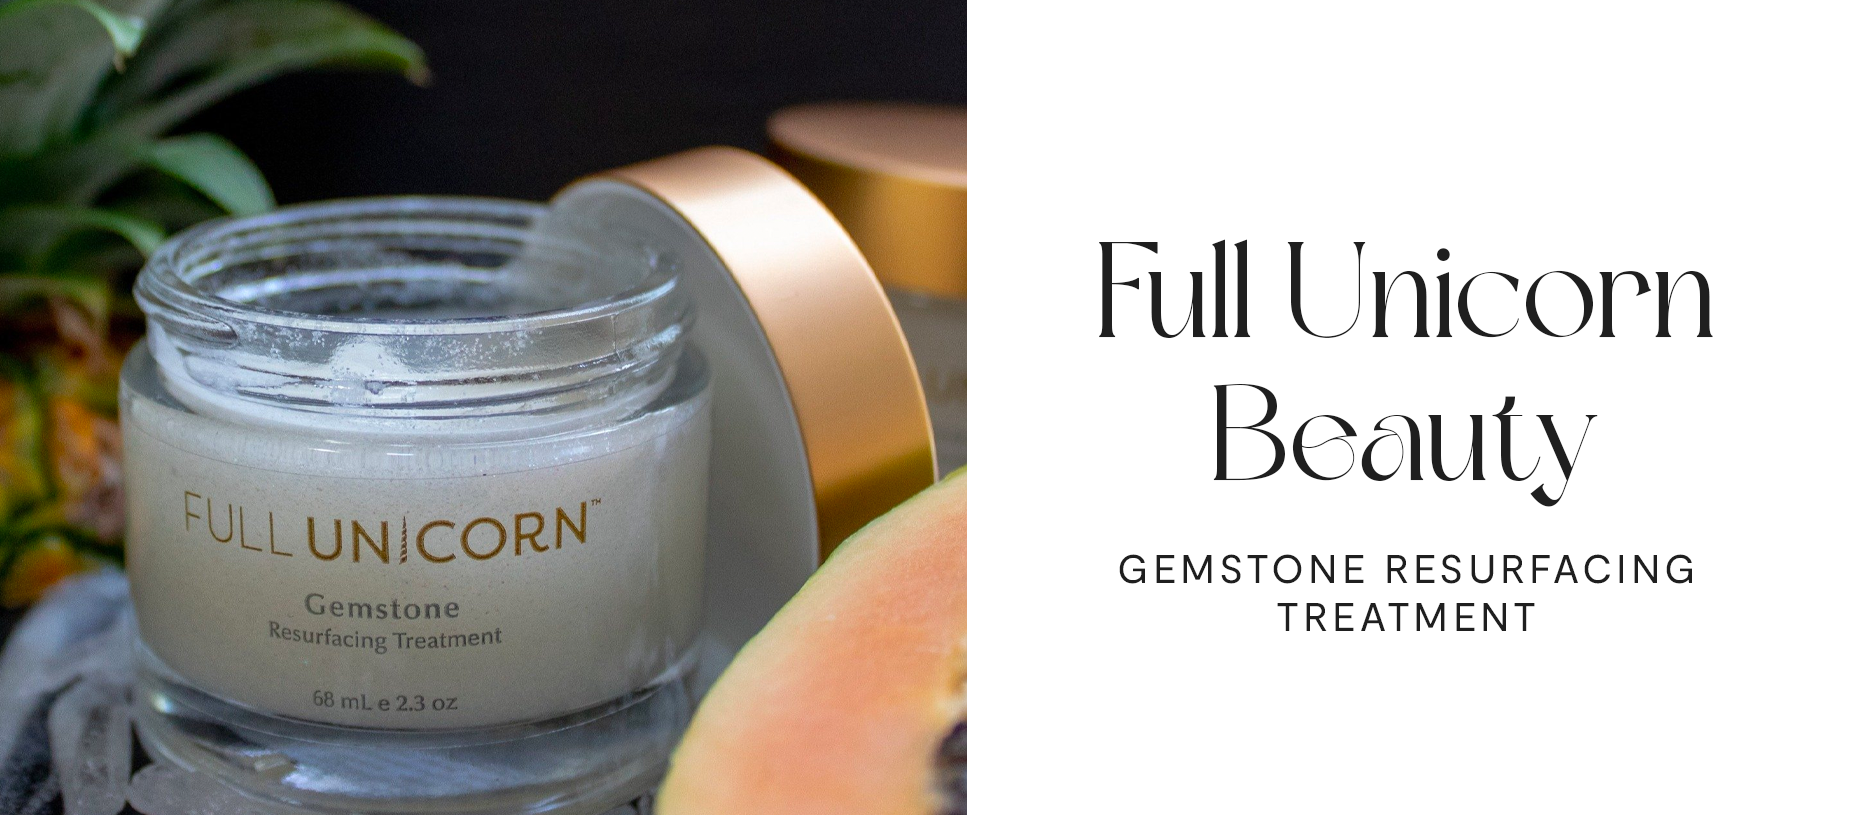 Full Unicorn Beauty - Gemstone Resurfacing Treatment